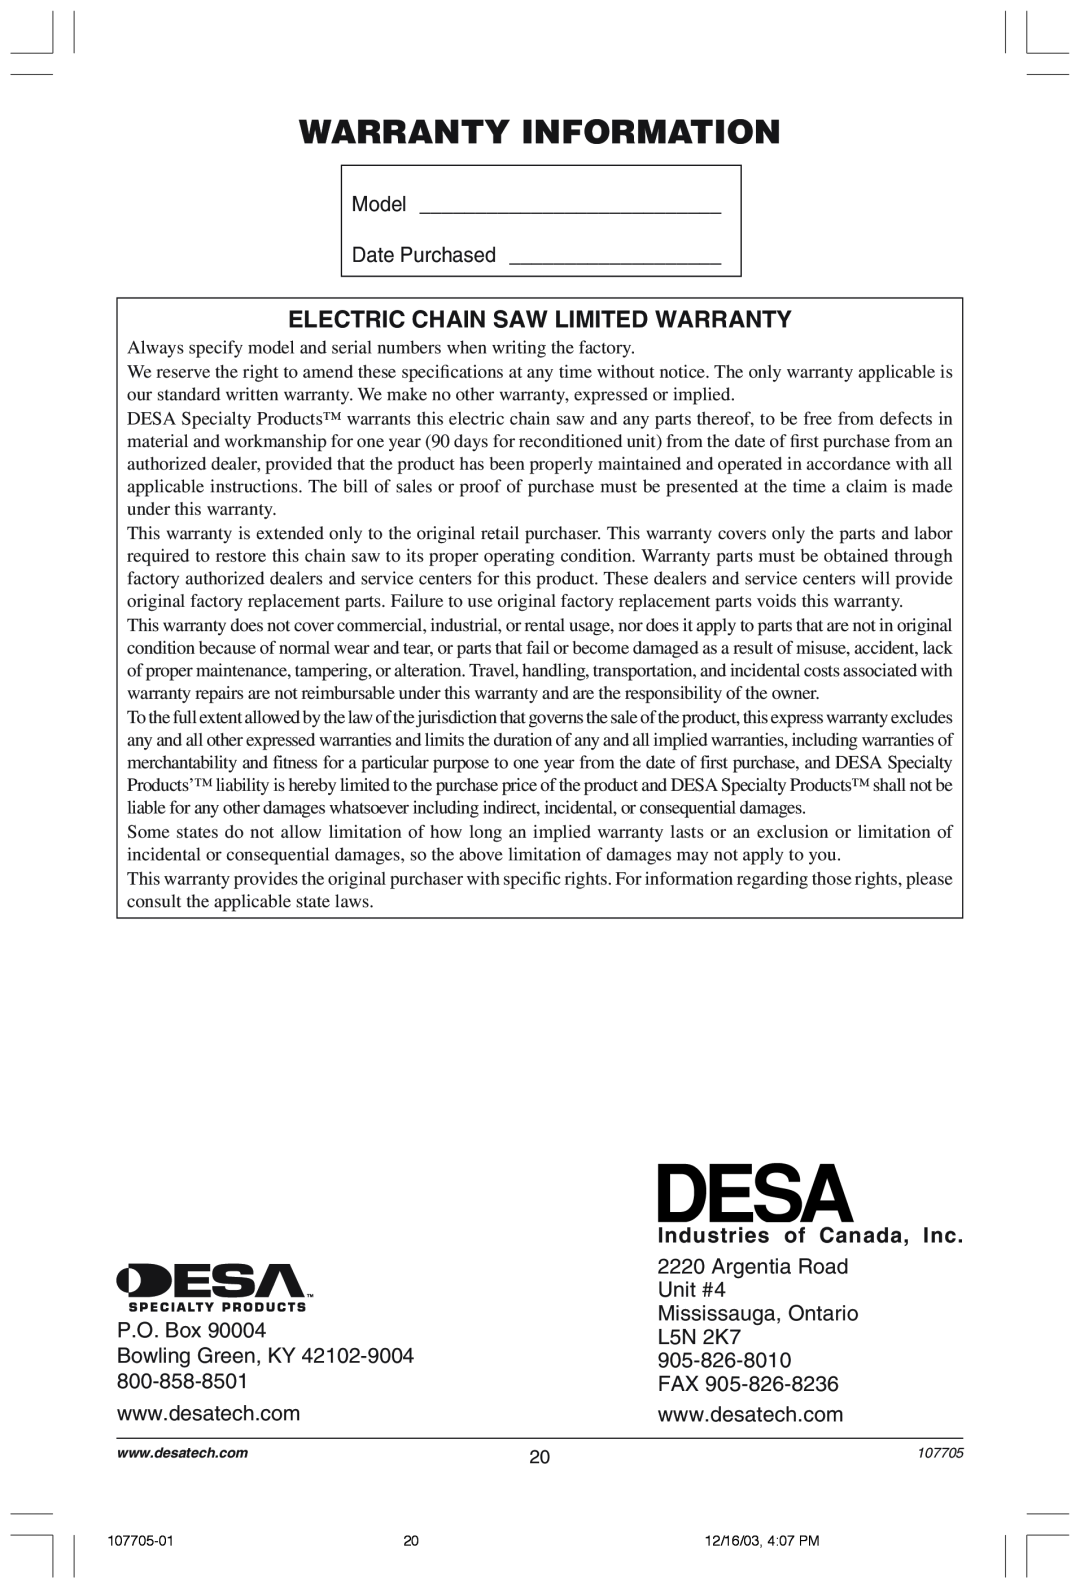 Desa 107624-01 owner manual Warranty Information, Electric Chain Saw Limited Warranty 